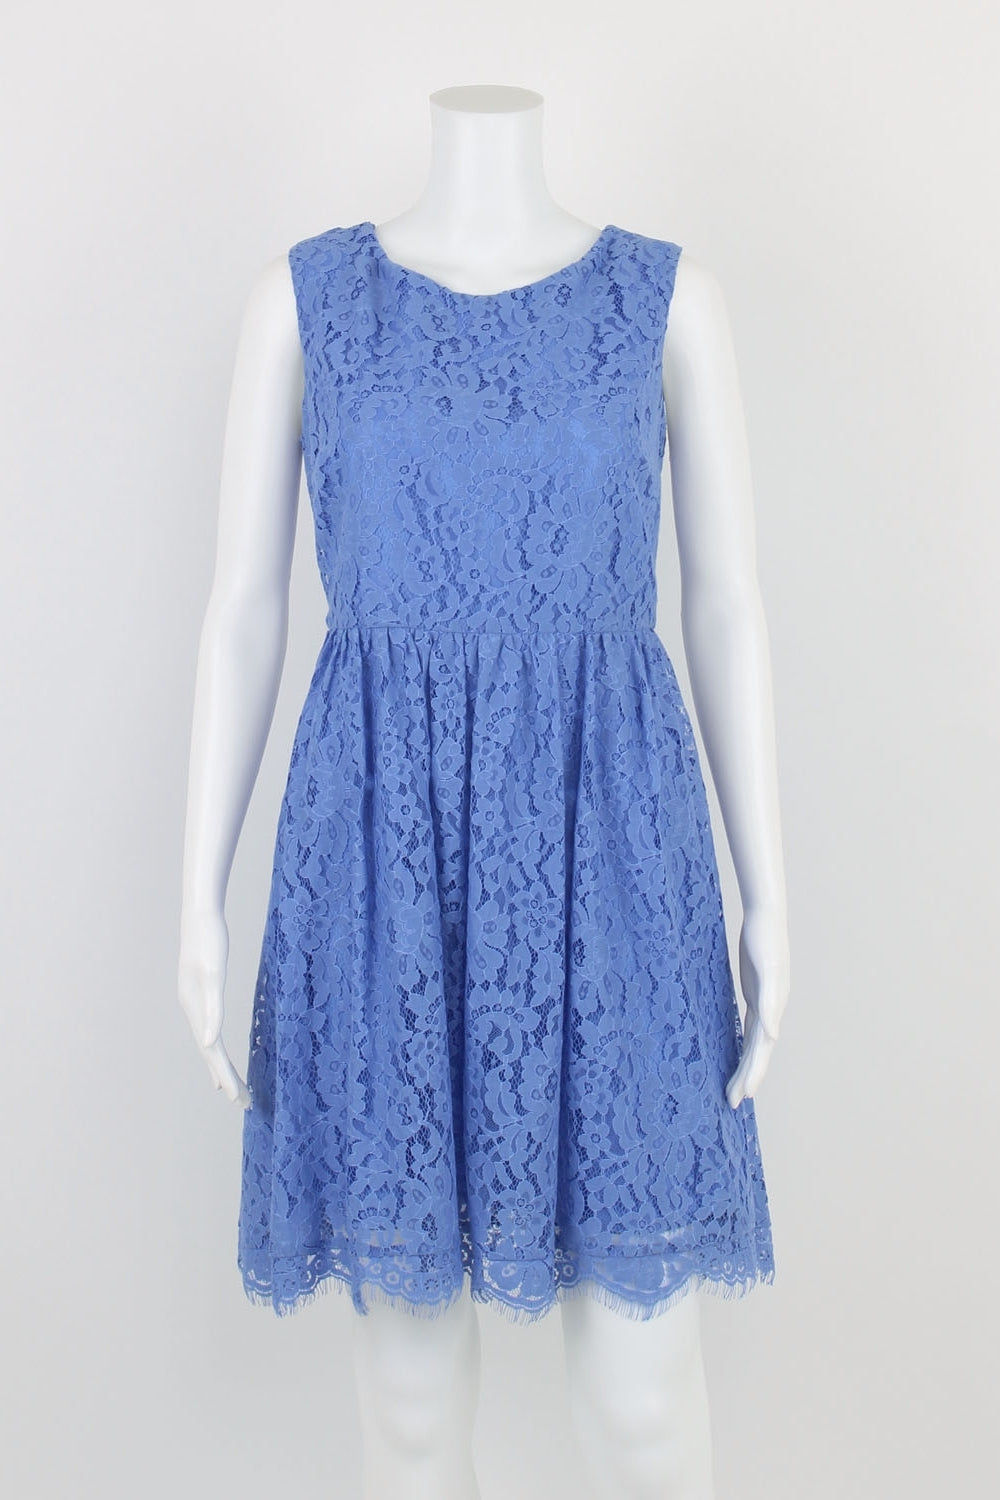 Forever New Lavender Lace Sleeveless Dress 12